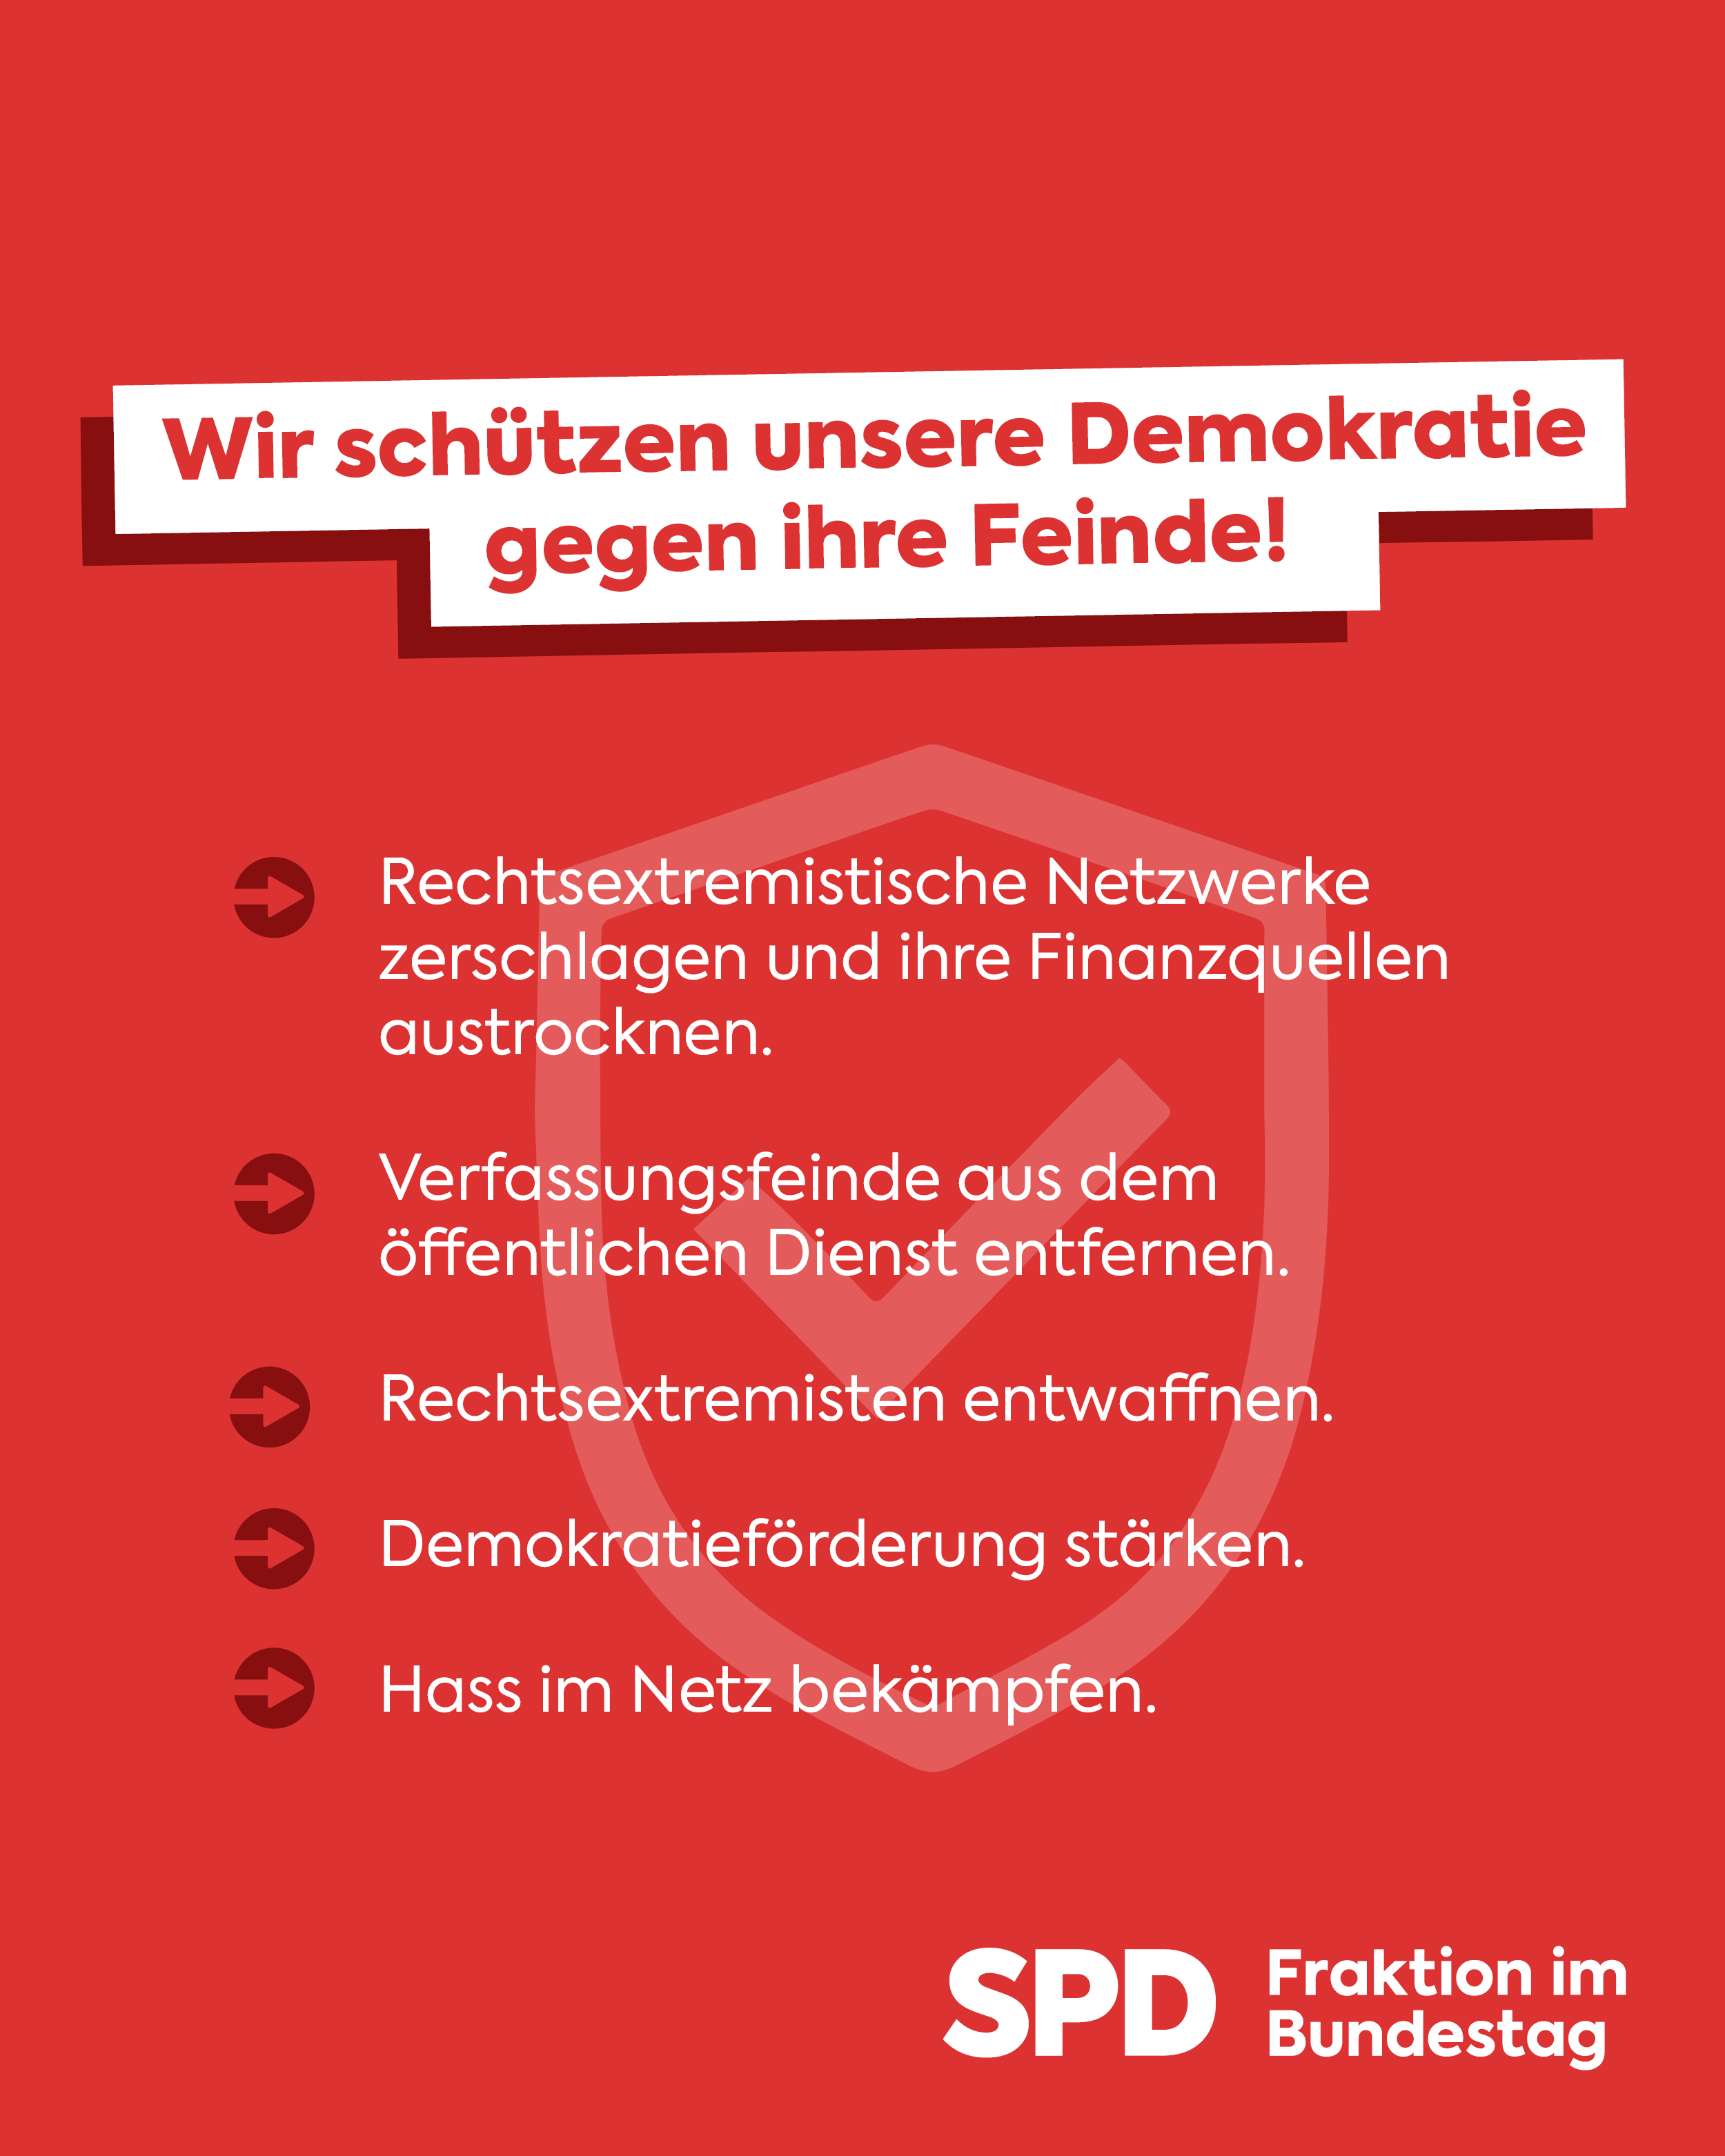 demokratie_schuetzen_sharepic